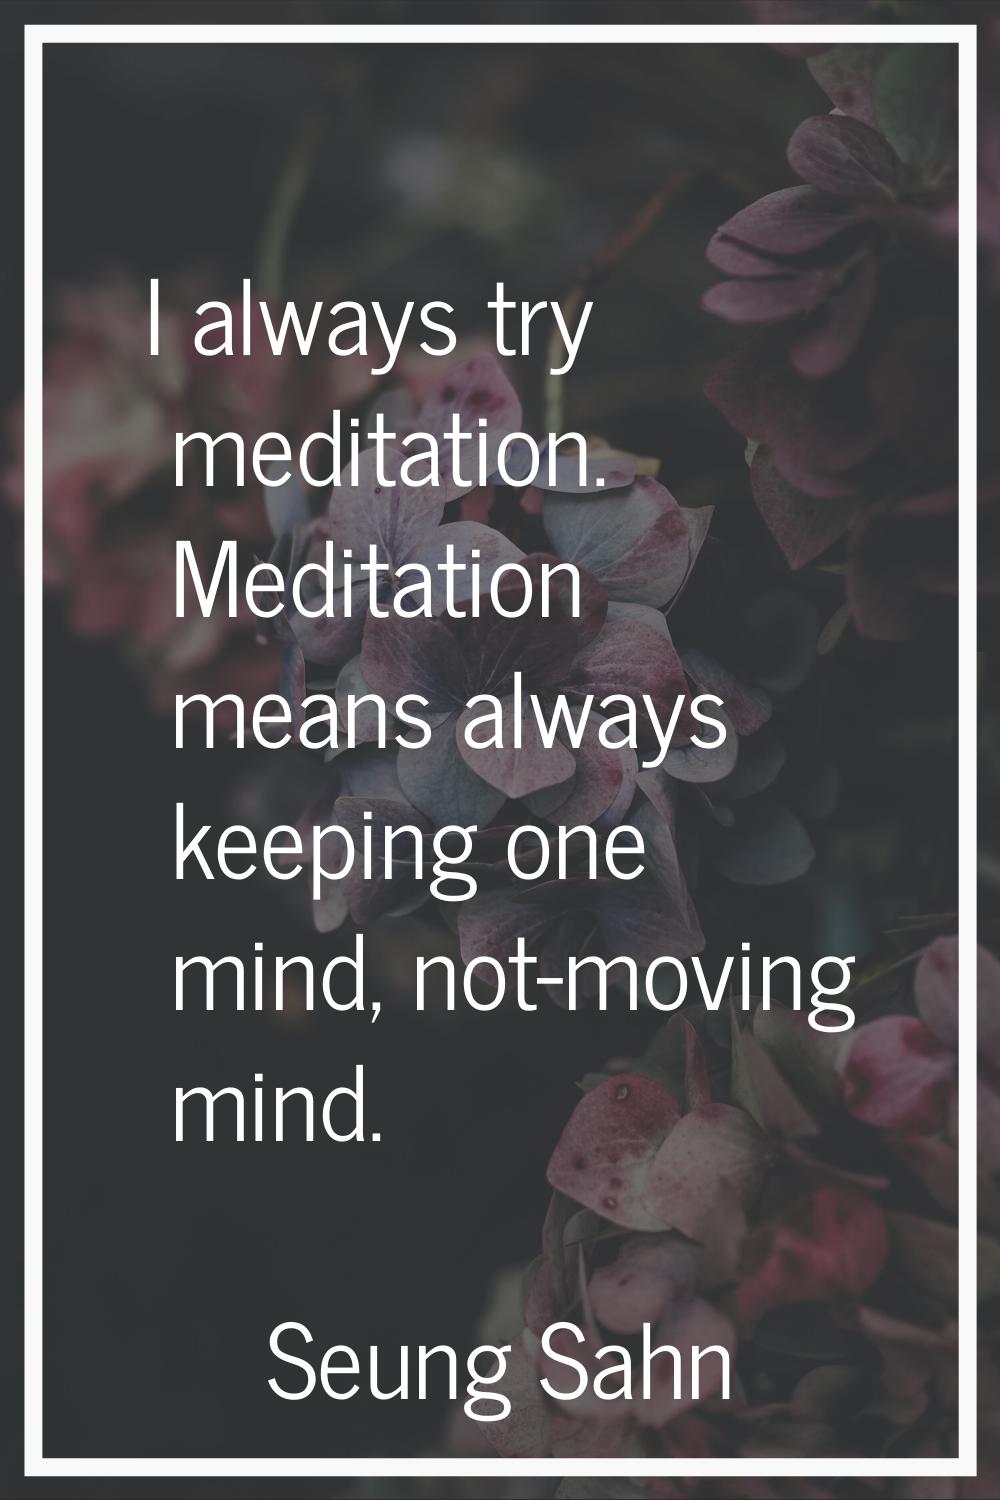 I always try meditation. Meditation means always keeping one mind, not-moving mind.